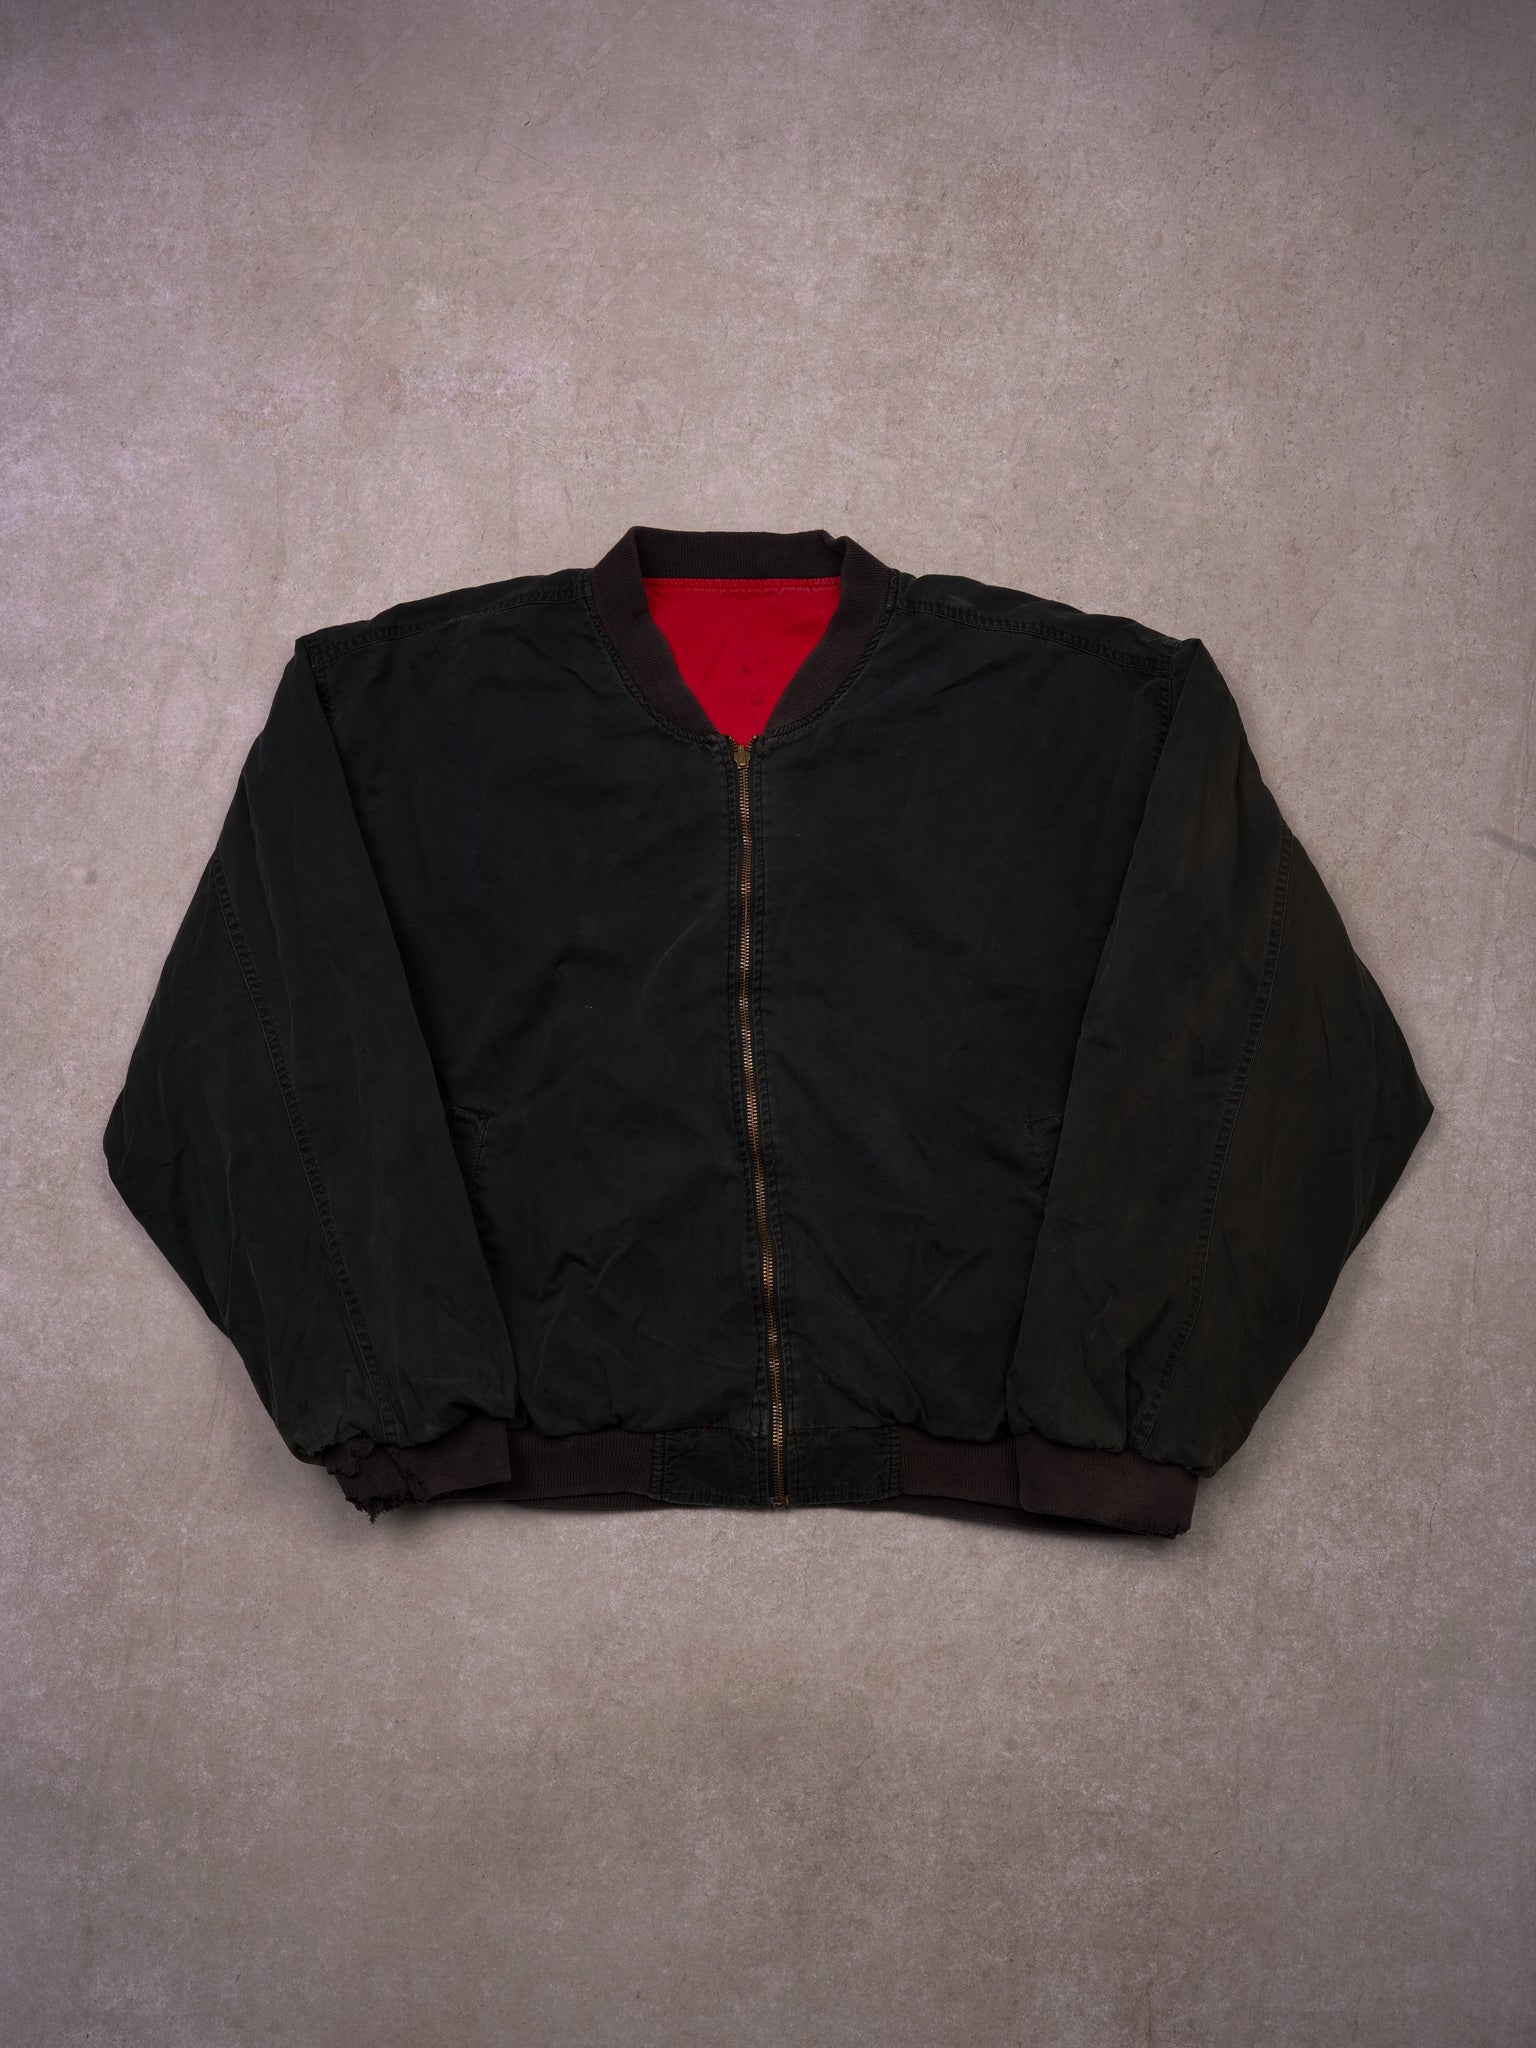 Vintage 80s Black and Red Malboro Reversible Bomber Jacket (L)